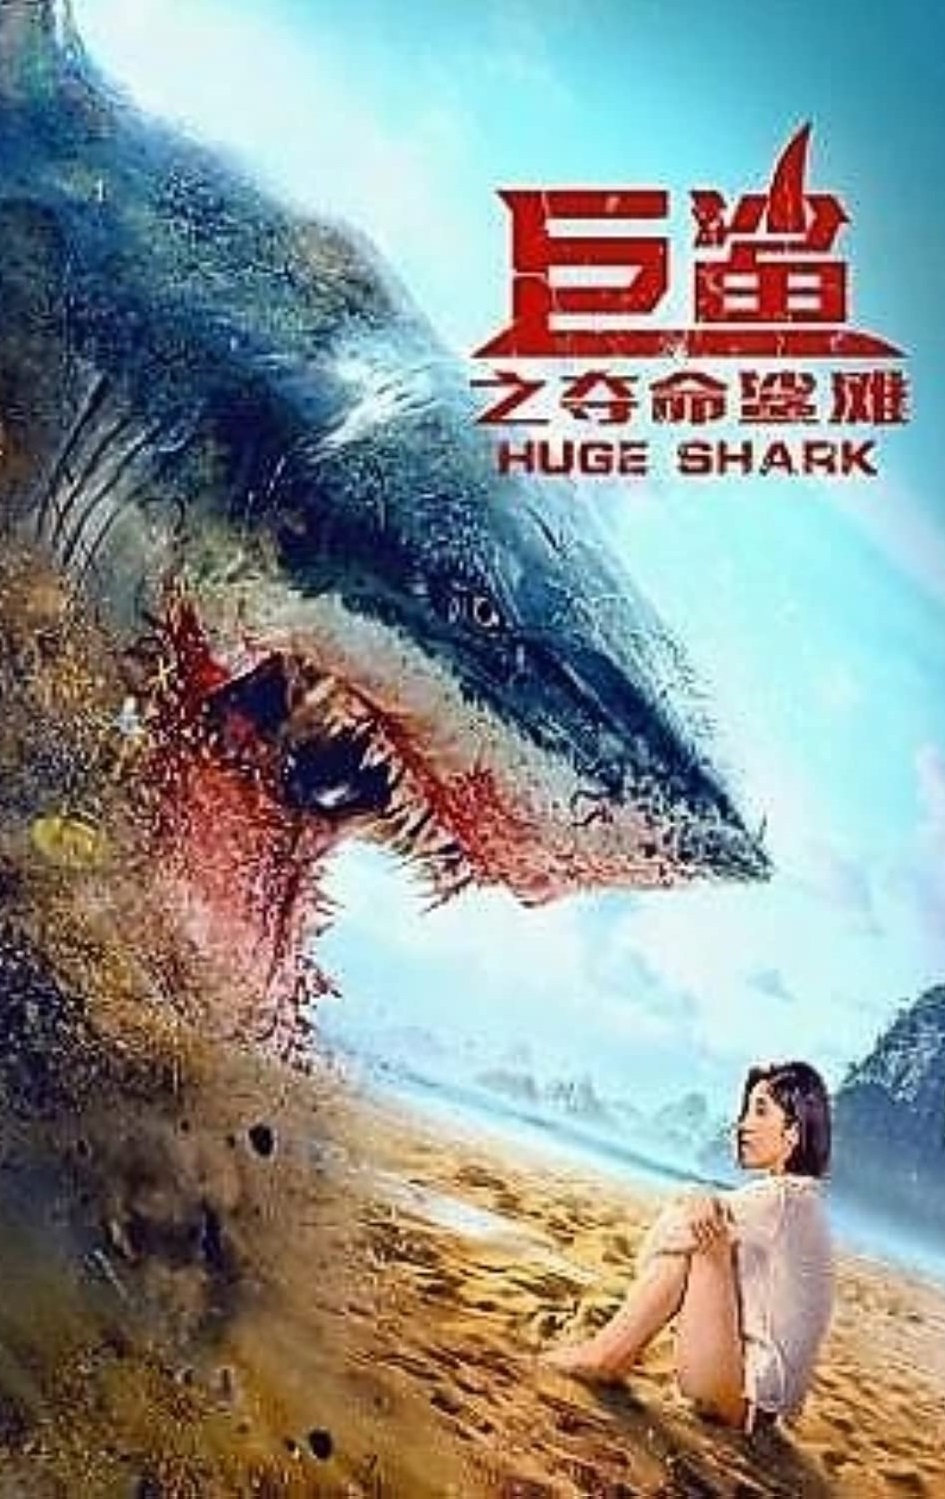 Huge Shark 2021 Tamil Dubbed Horror Movie Online